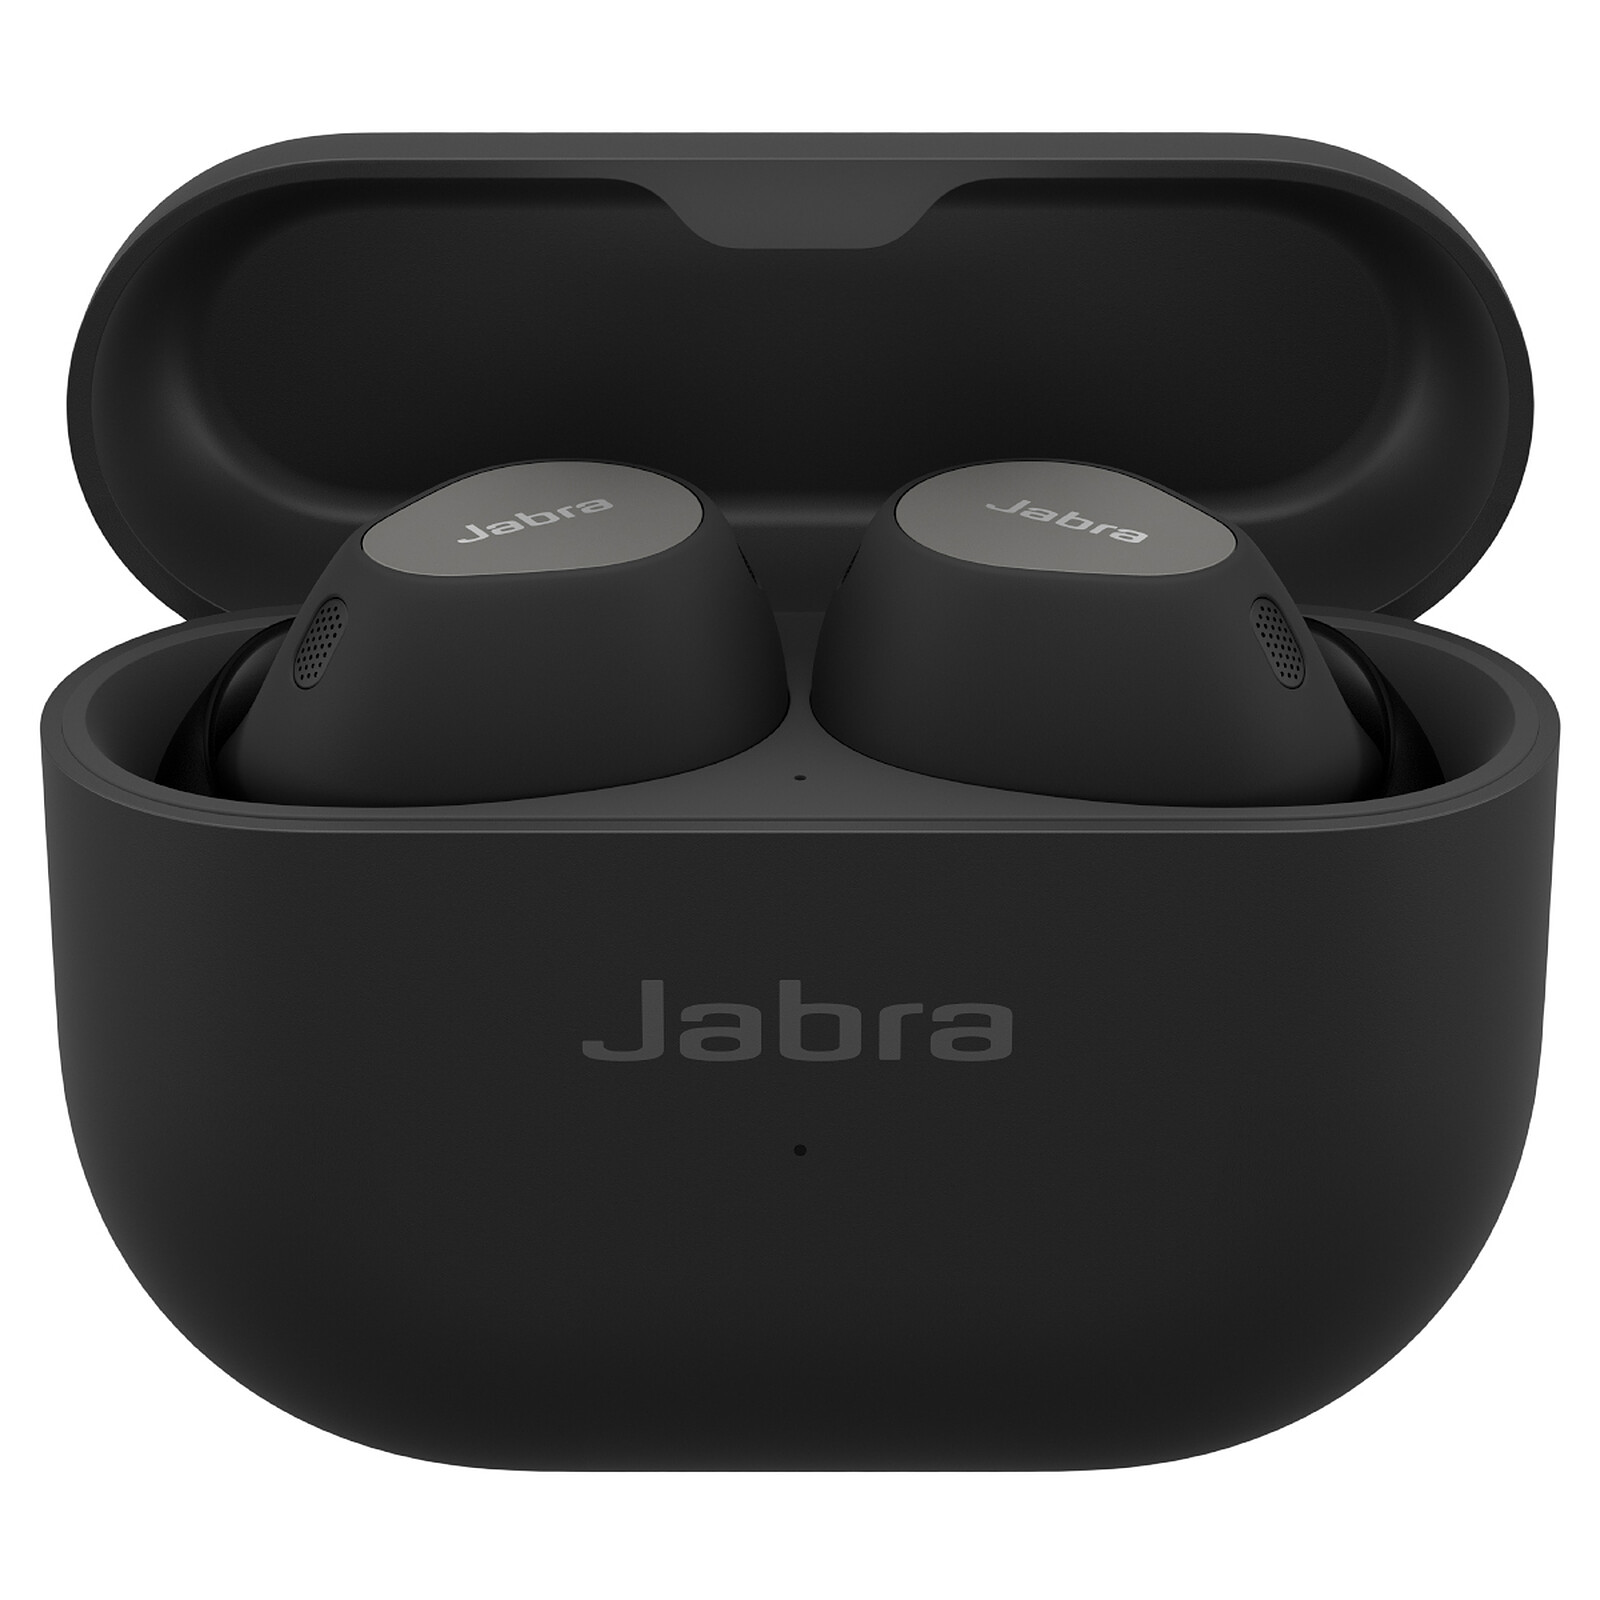 Jabra Elite 5 True Wireless - Ecouteurs sans fil Bluetooth intra